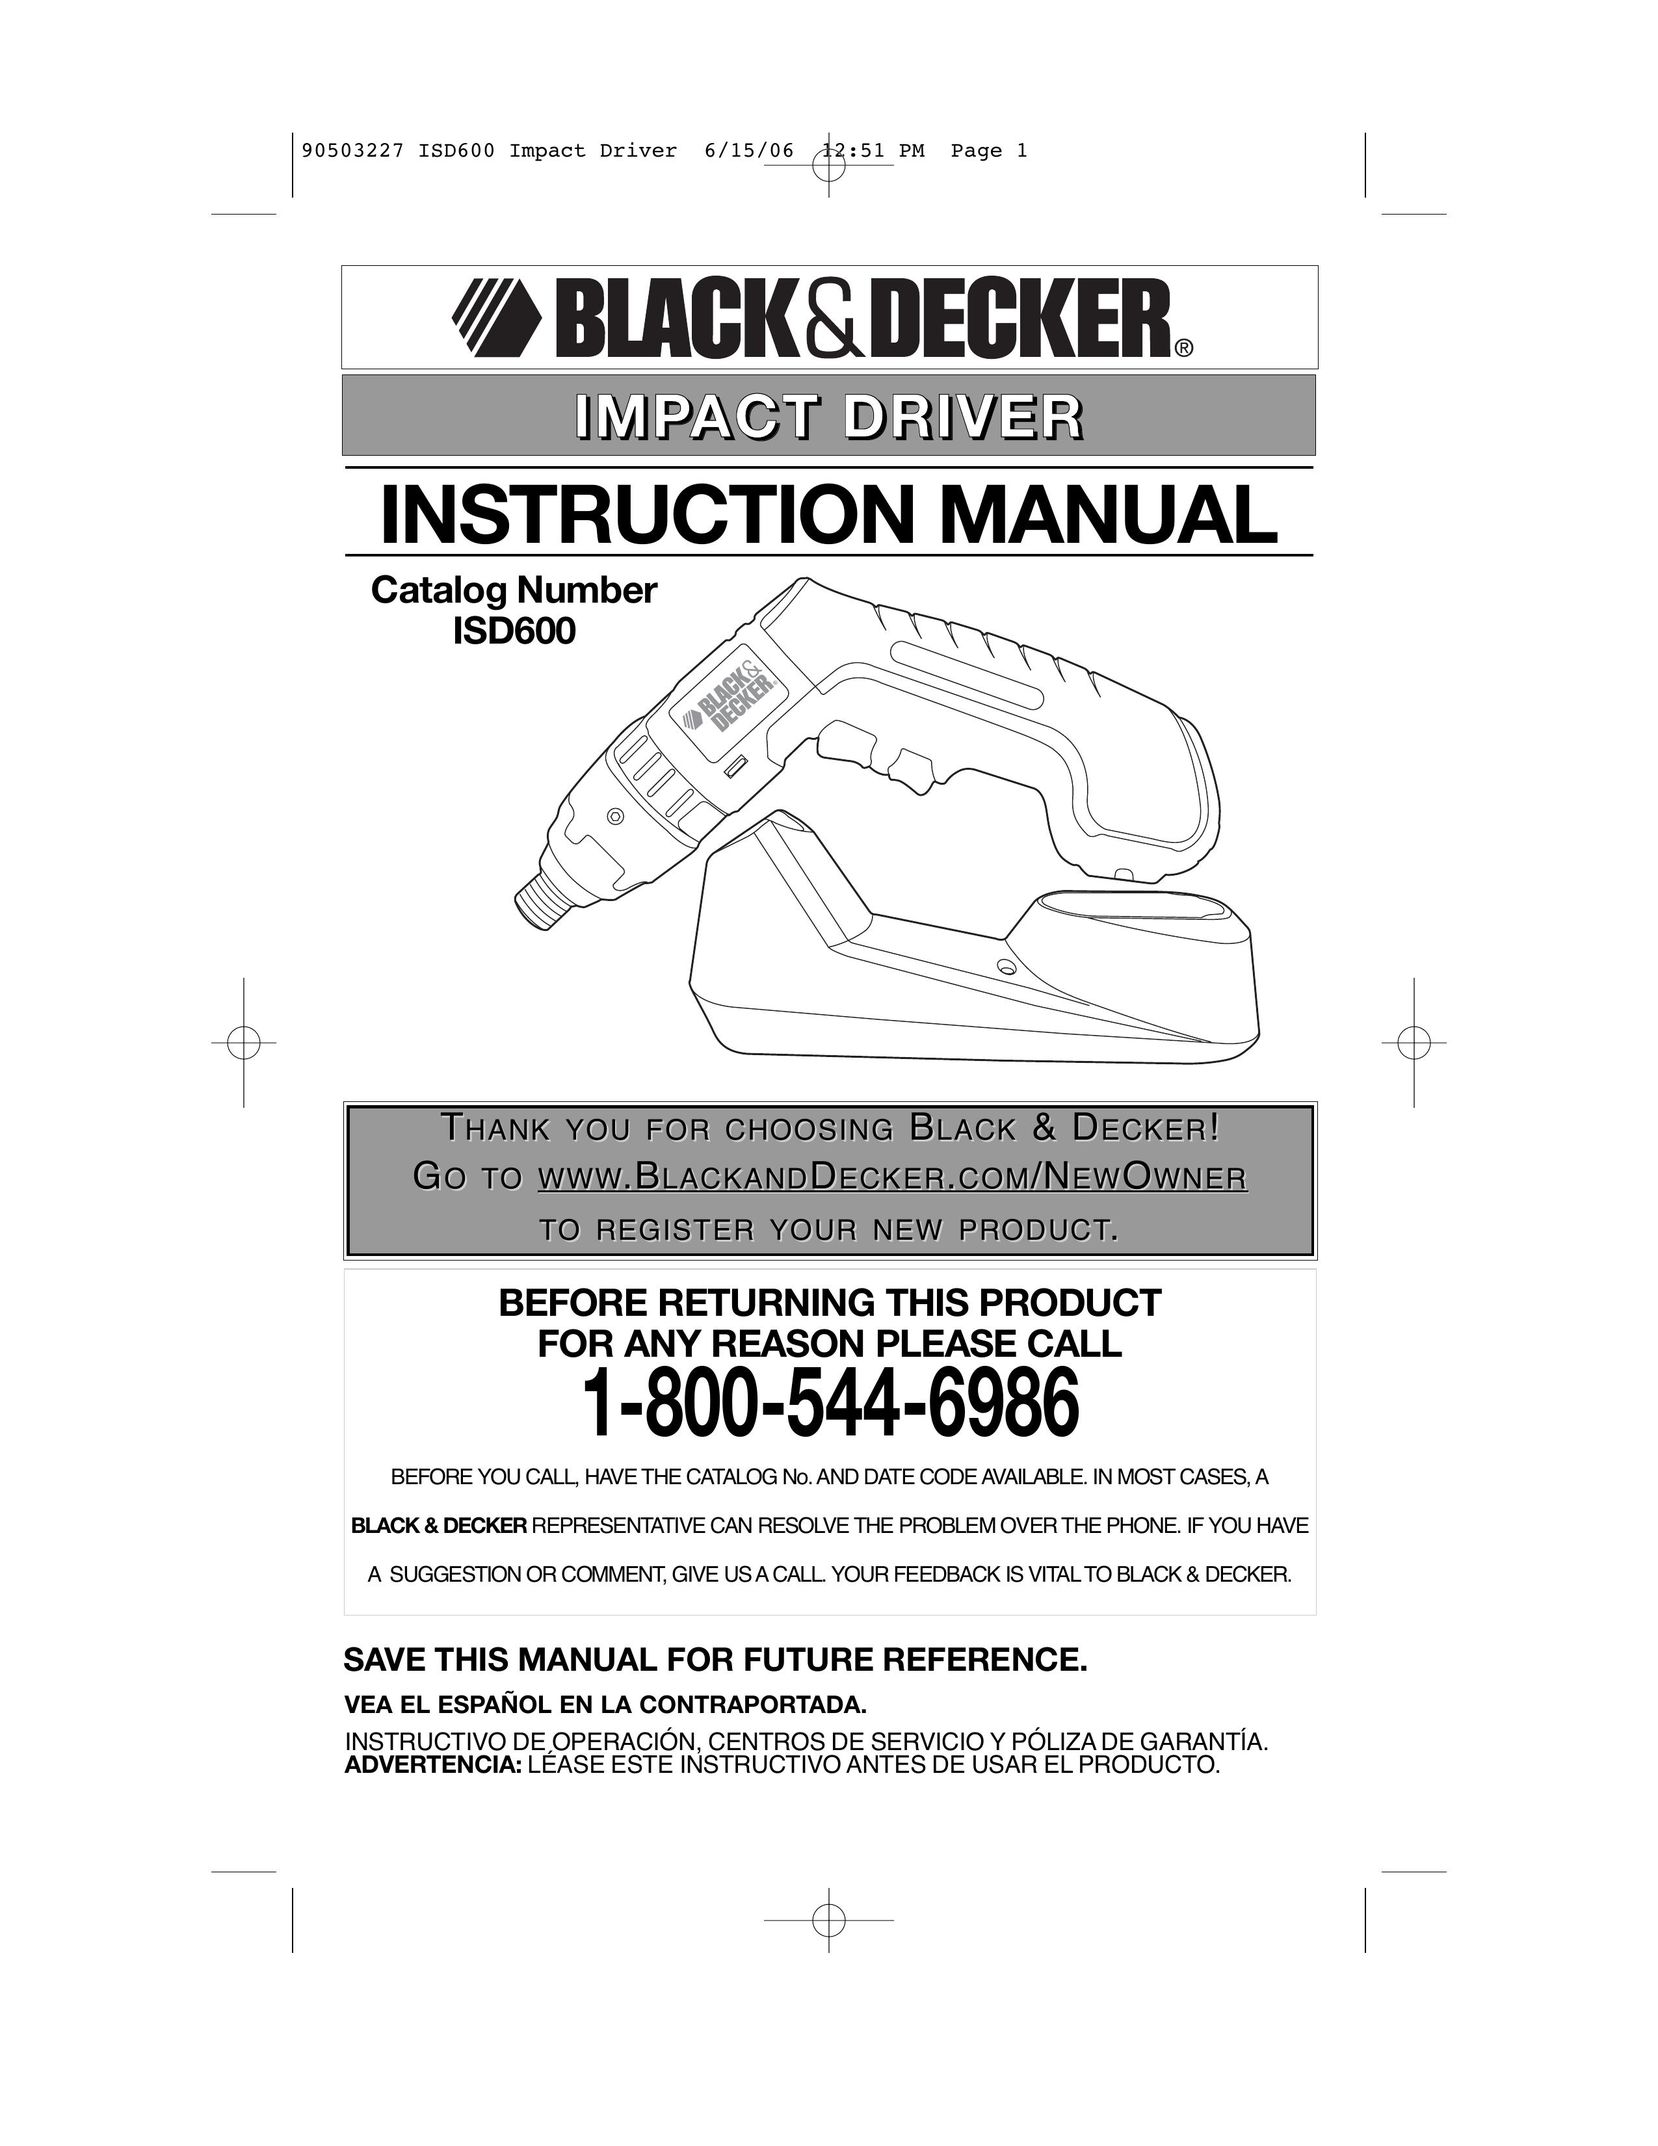 Black & Decker 90503227 Impact Driver User Manual